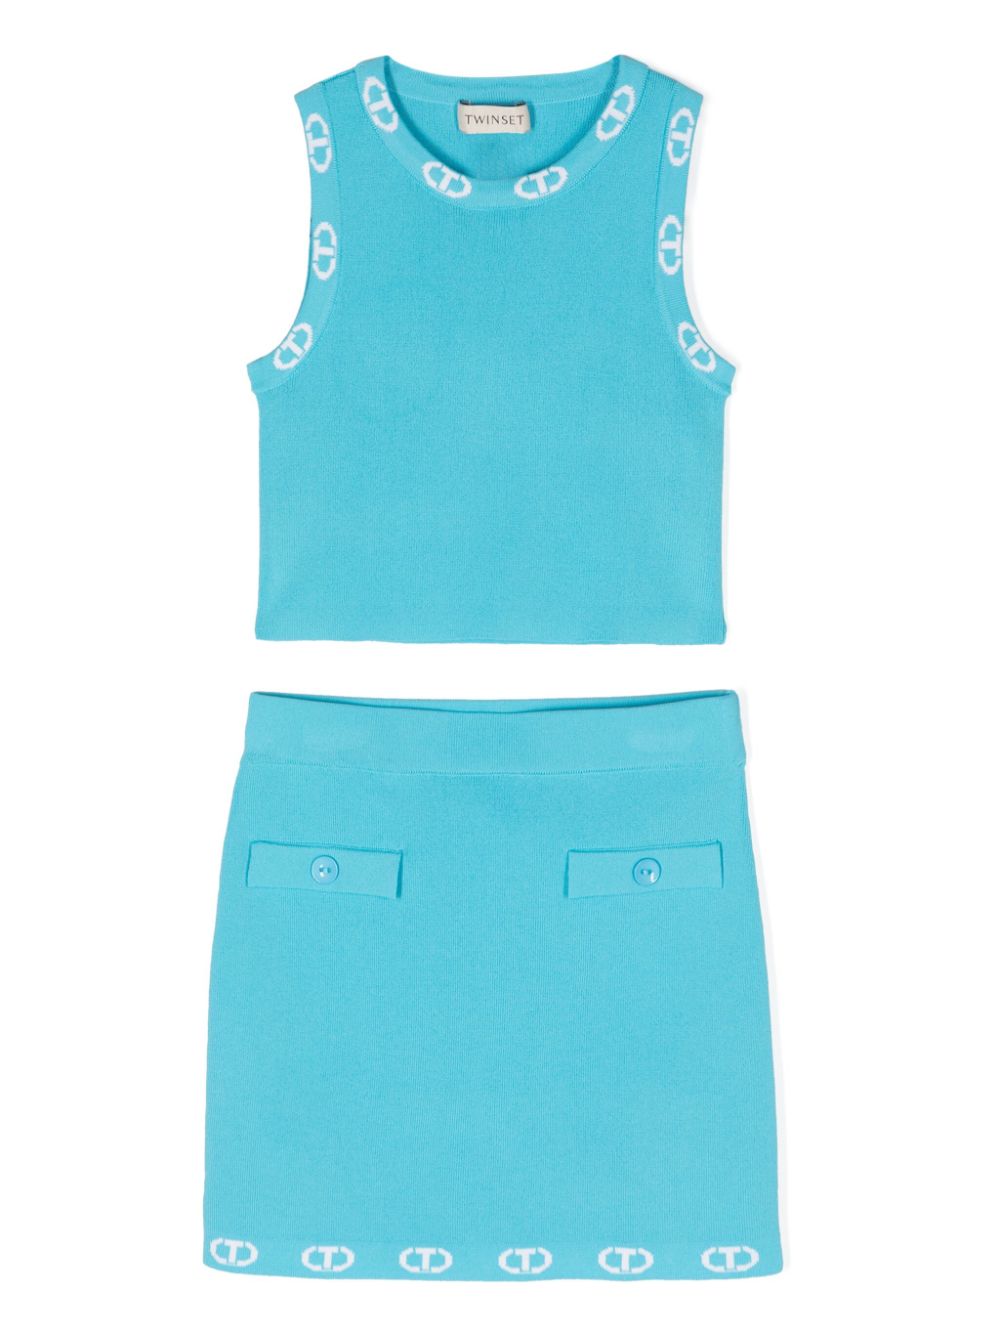 Elegant aqua blue outfit for girls with logo